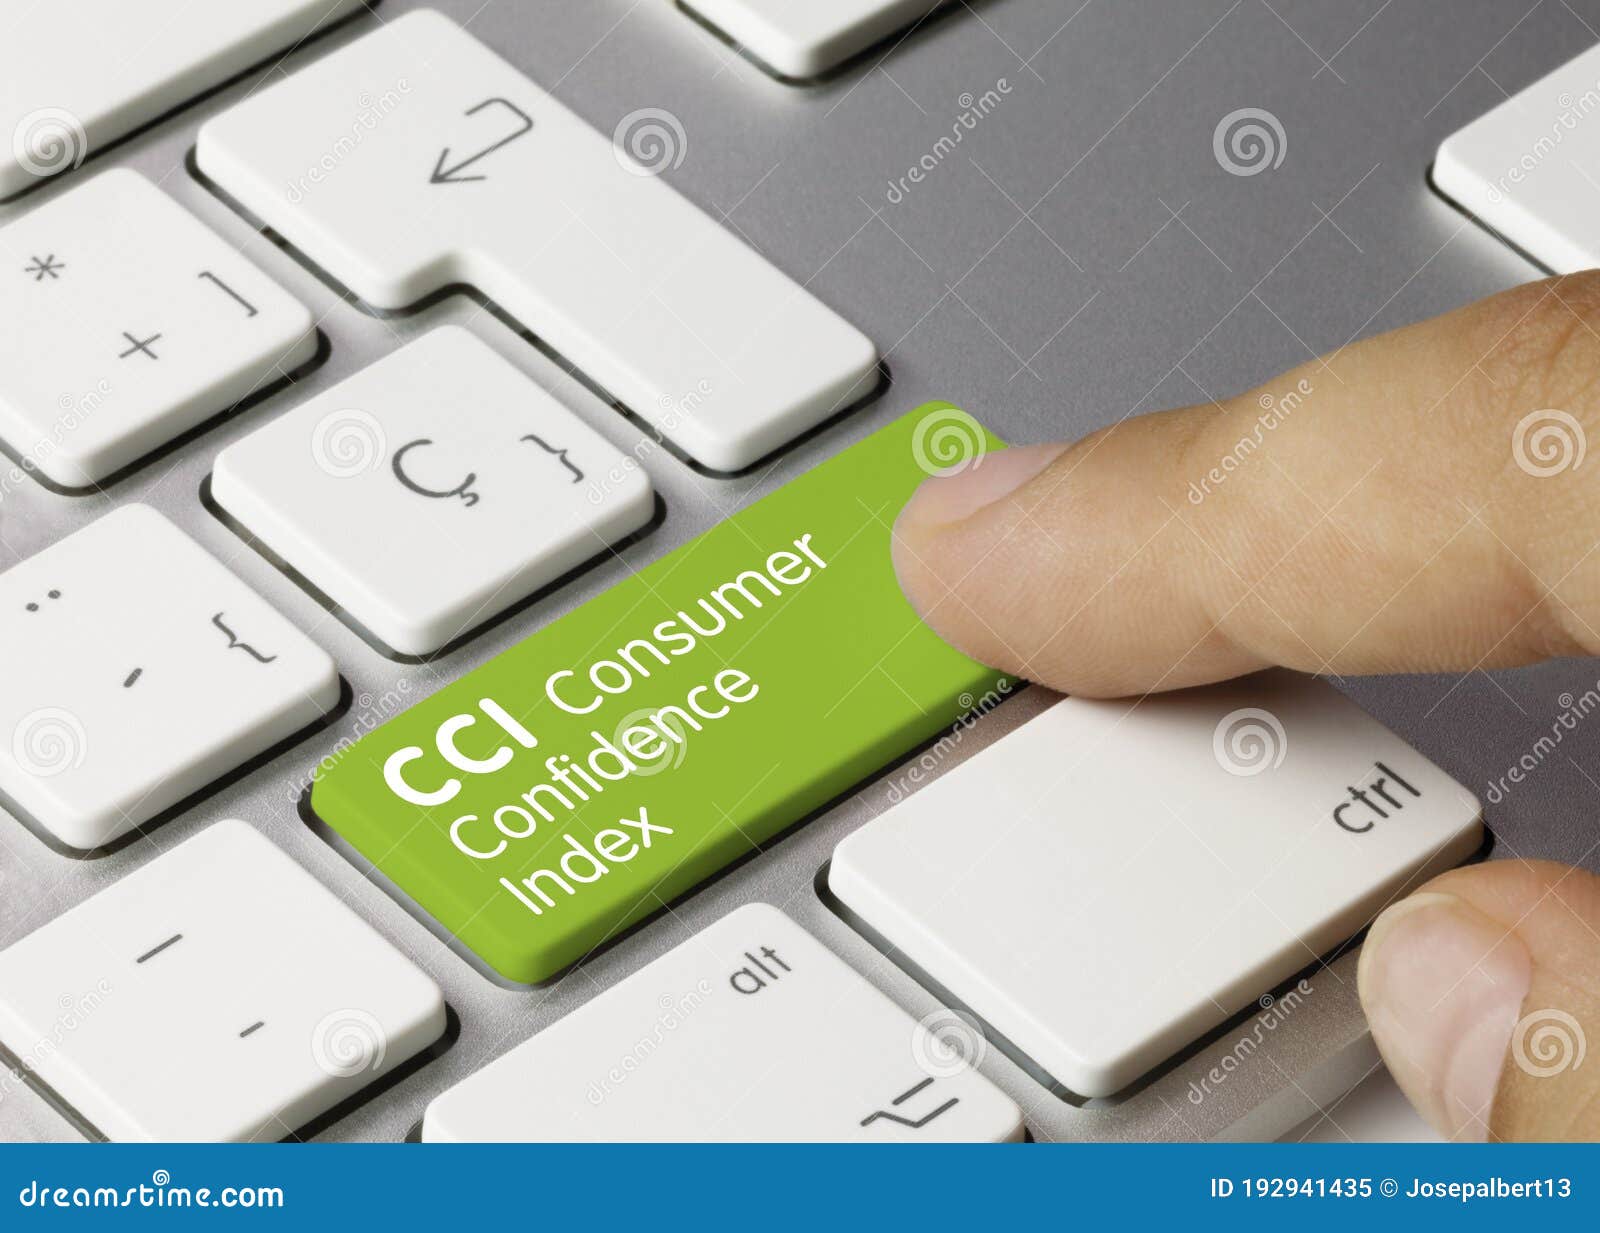 cci consumer confidence index - inscription on green keyboard key